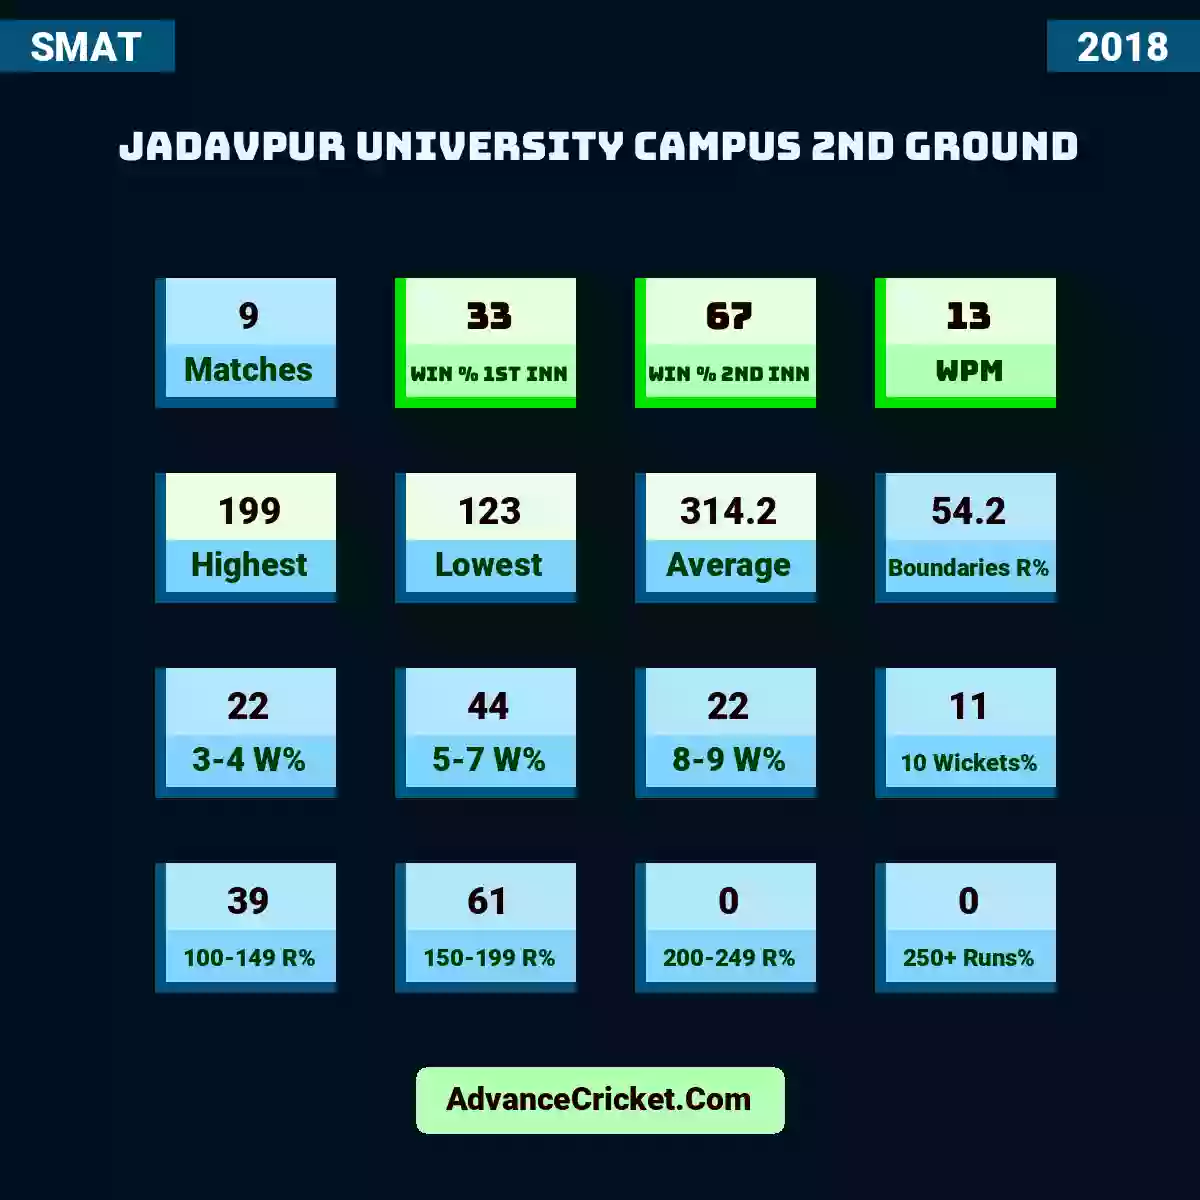 Image showing Jadavpur University Campus 2nd Ground with Matches: 9, Win % 1st Inn: 33, Win % 2nd Inn: 67, WPM: 13, Highest: 199, Lowest: 123, Average: 314.2, Boundaries R%: 54.2, 3-4 W%: 22, 5-7 W%: 44, 8-9 W%: 22, 10 Wickets%: 11, 100-149 R%: 39, 150-199 R%: 61, 200-249 R%: 0, 250+ Runs%: 0.